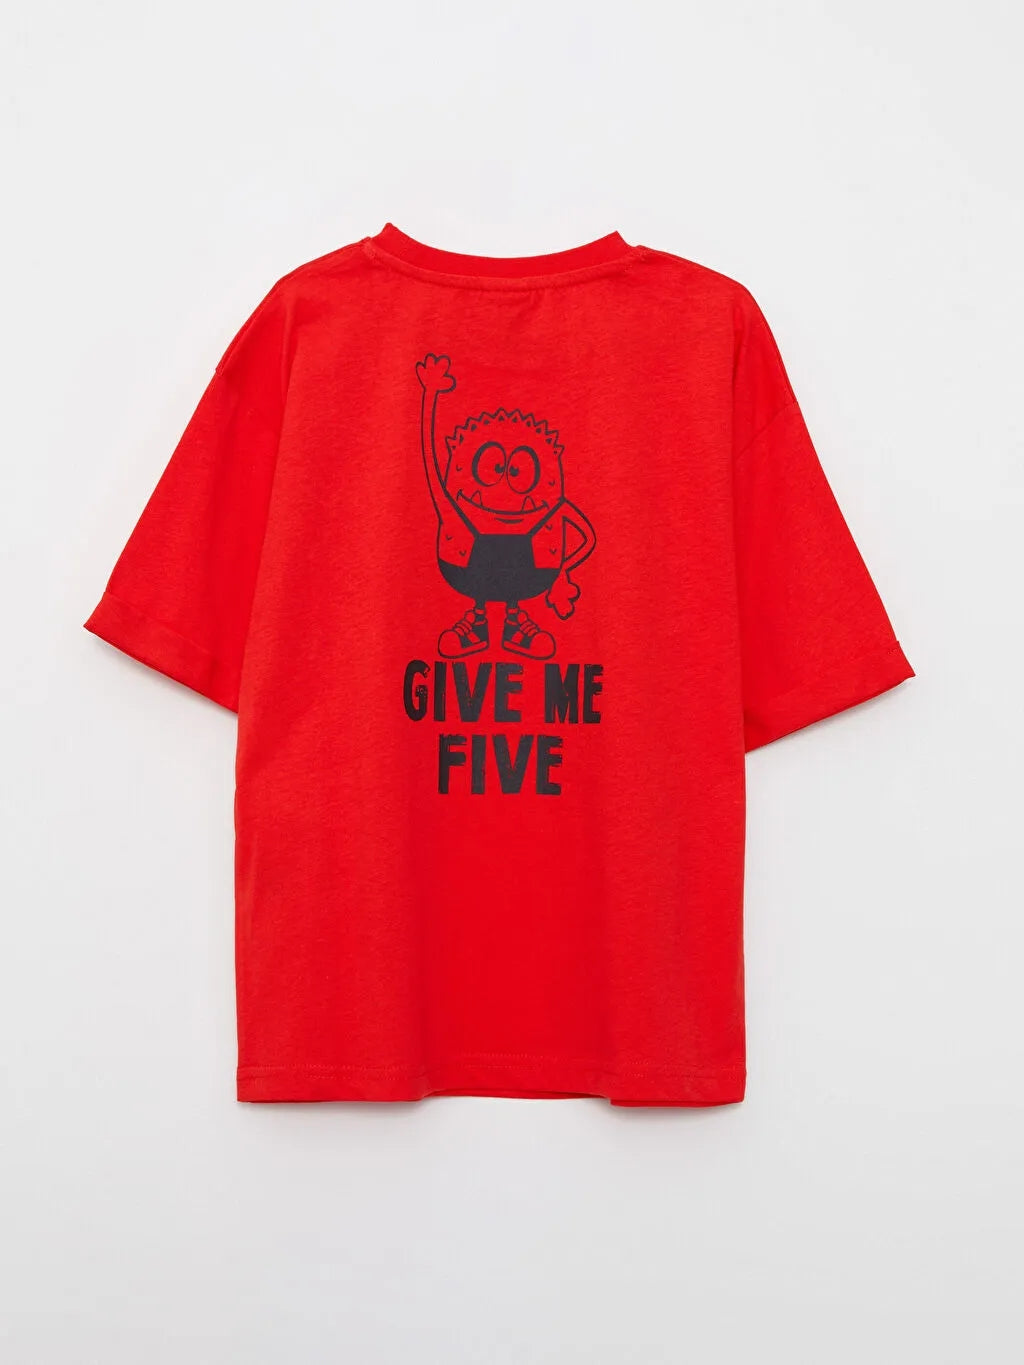 Crew Neck Printed Short Sleeve Boy T-Shirt & Bermuda